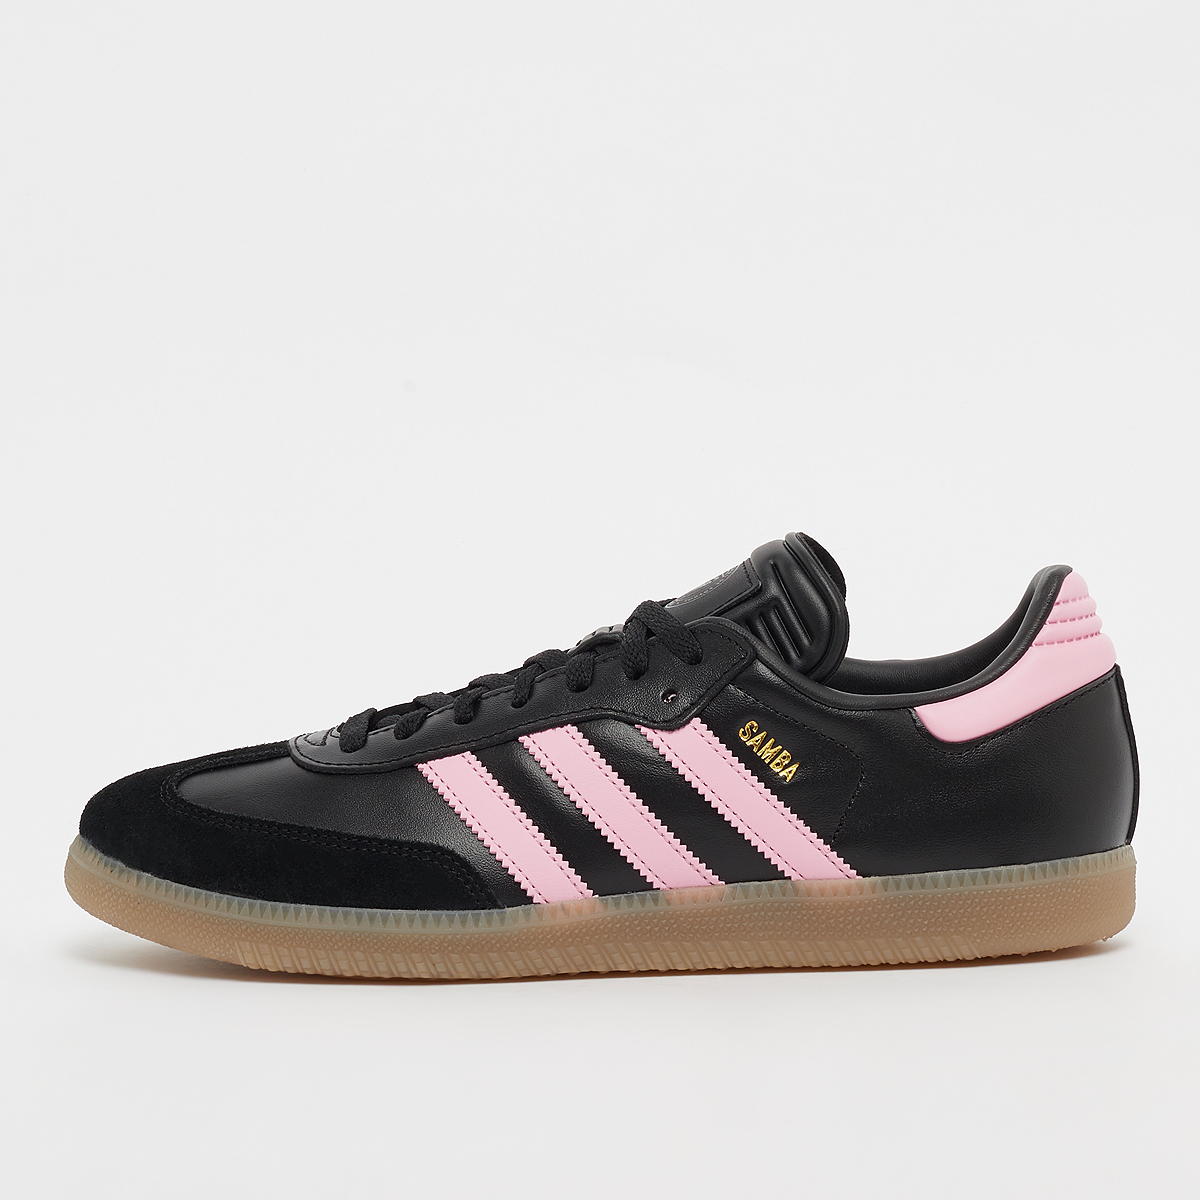 Sneaker Samba Inter Miami, adidas Originals, Footwear, core black/light pink/gum4, taille: 42 2/3